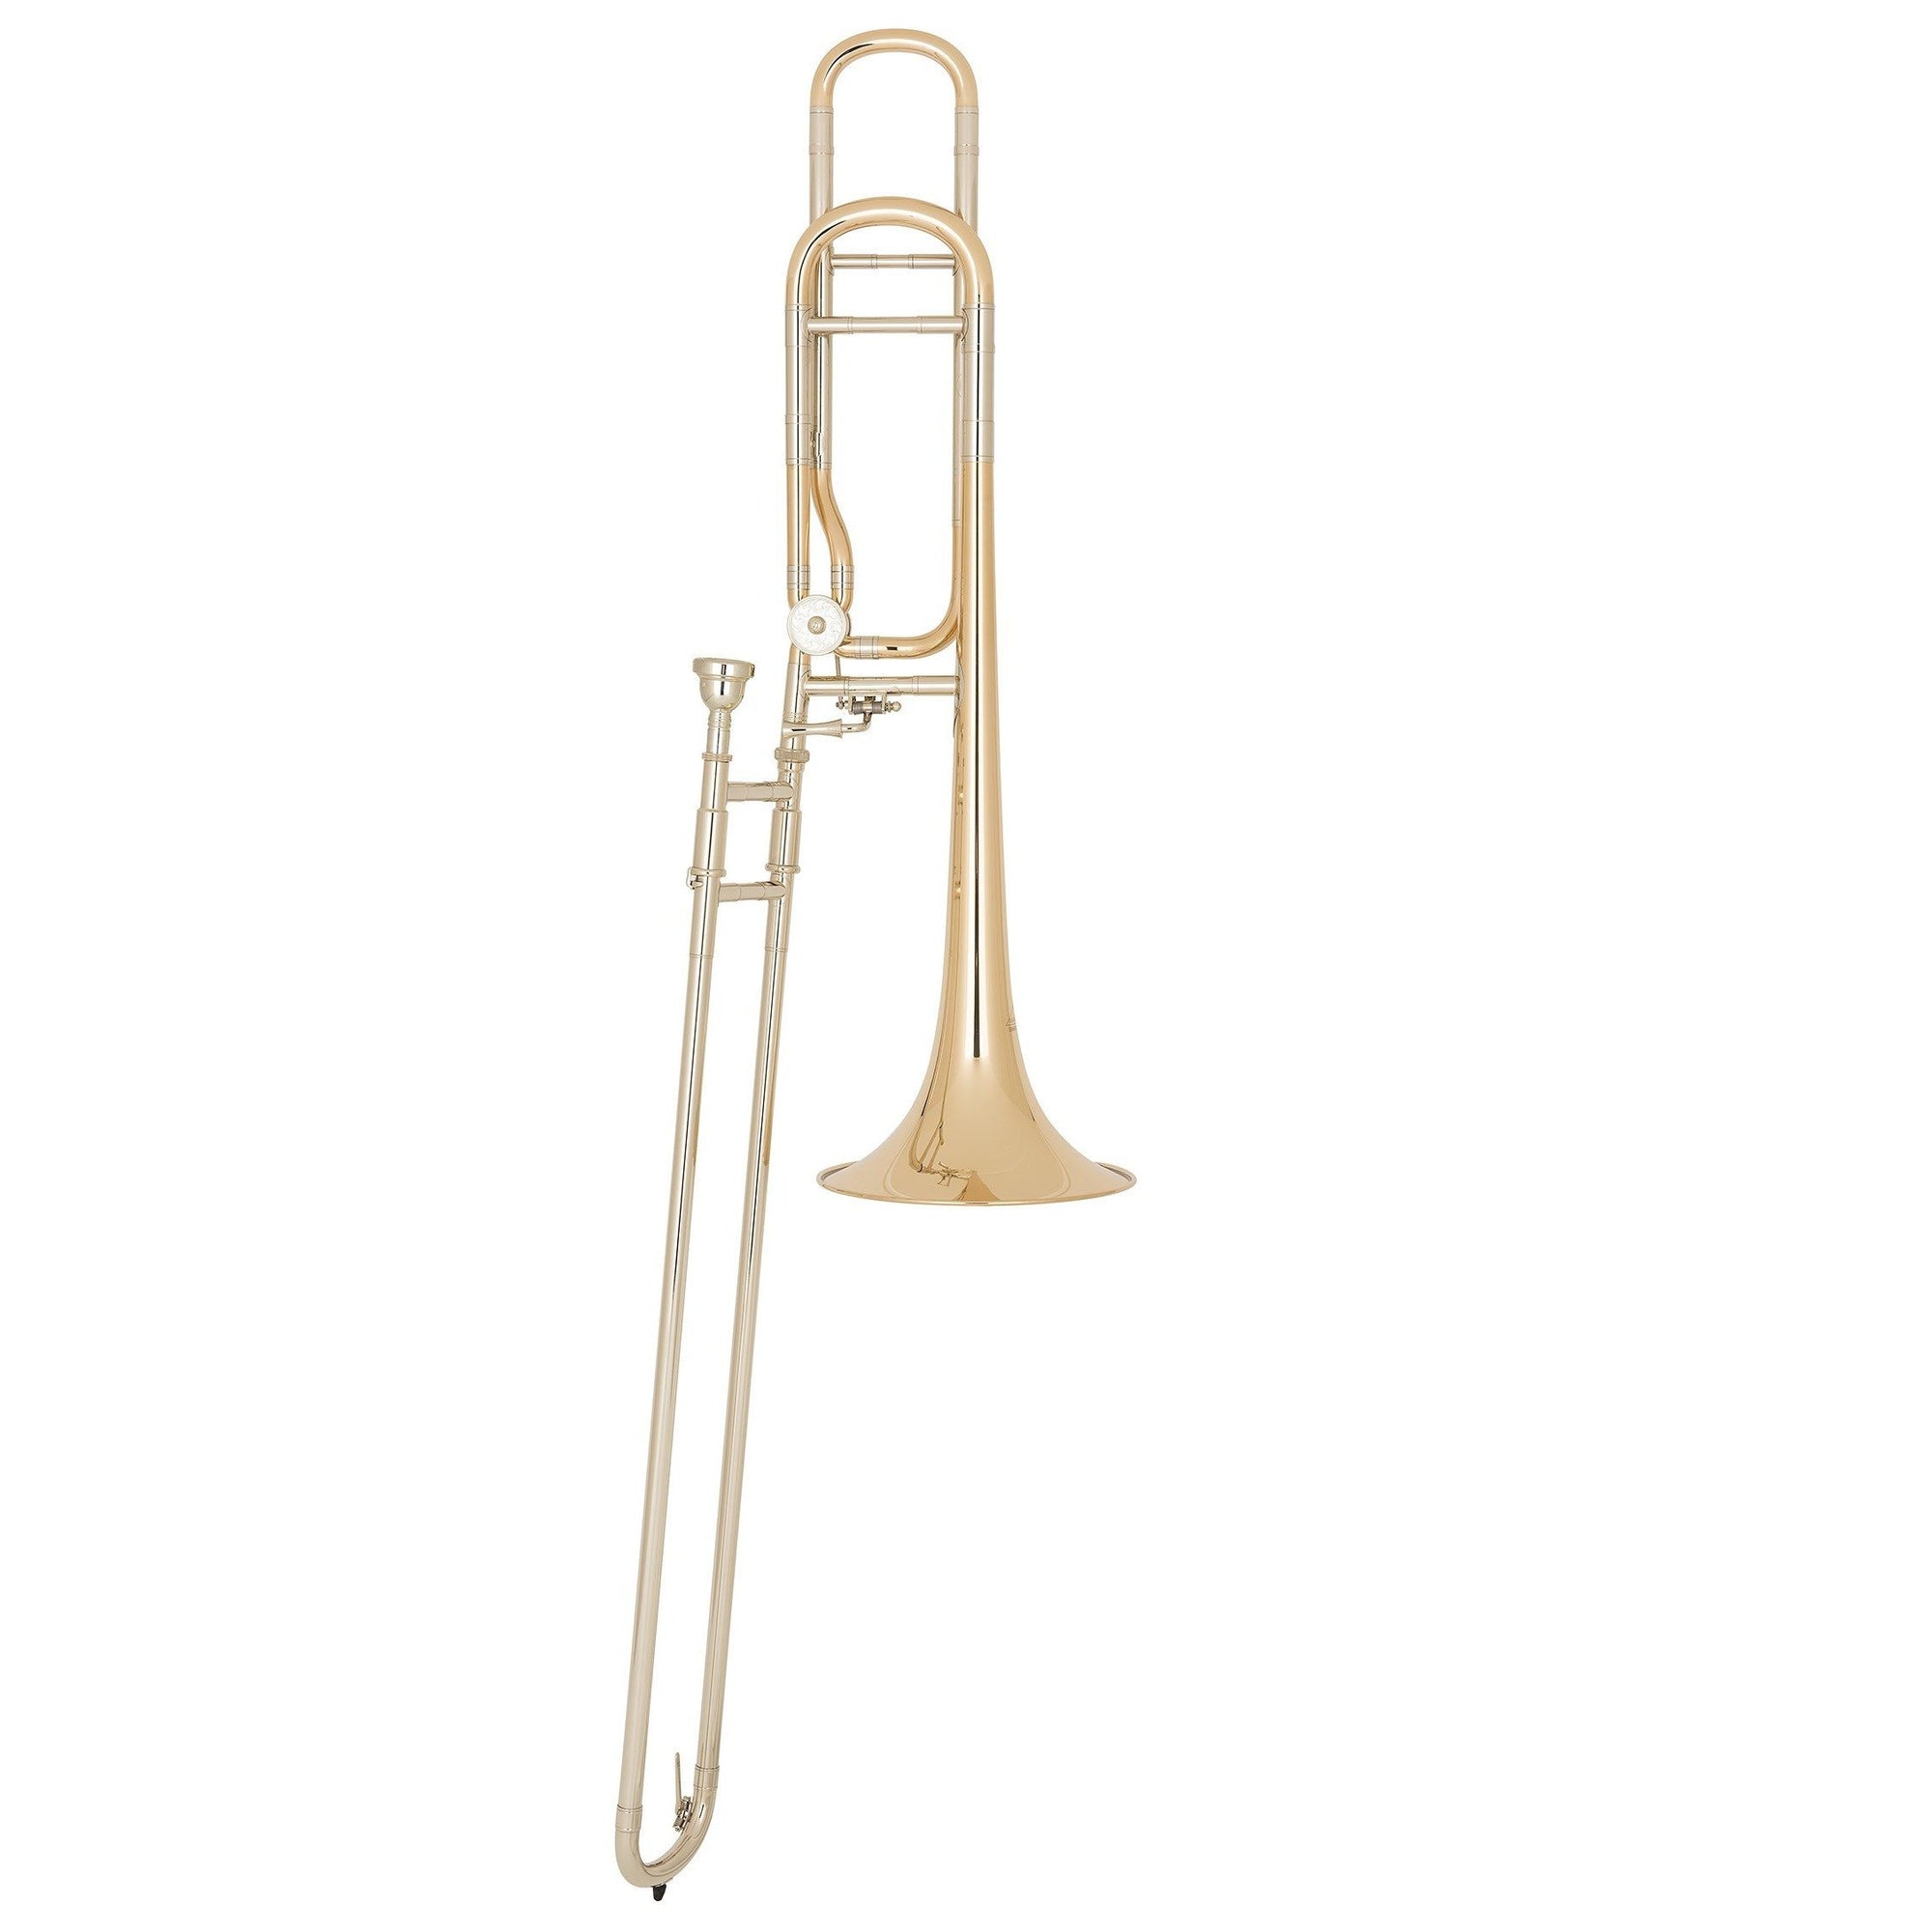 Miraphone - Model M6600 Bb/F Tenor Trombones-Trombone-Miraphone-Music Elements